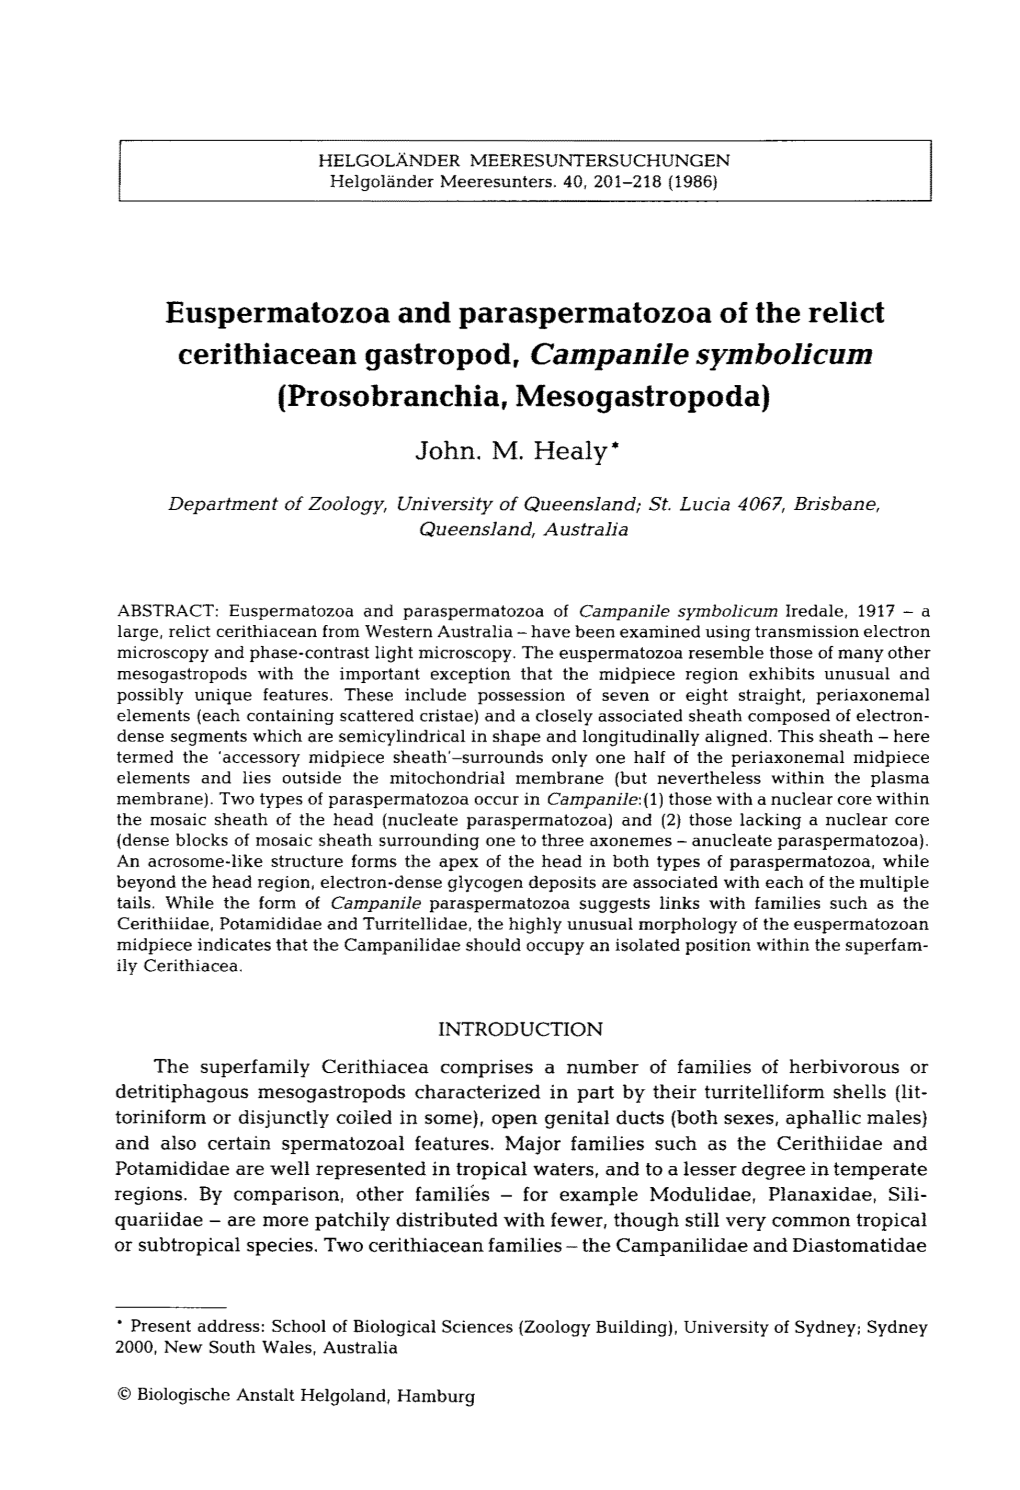 Euspermatozoa and Paraspermatozoa of the Relict Cerithiacean Gastropod, Campanile Symbolicum (Prosobranchia, Mesogastropoda)